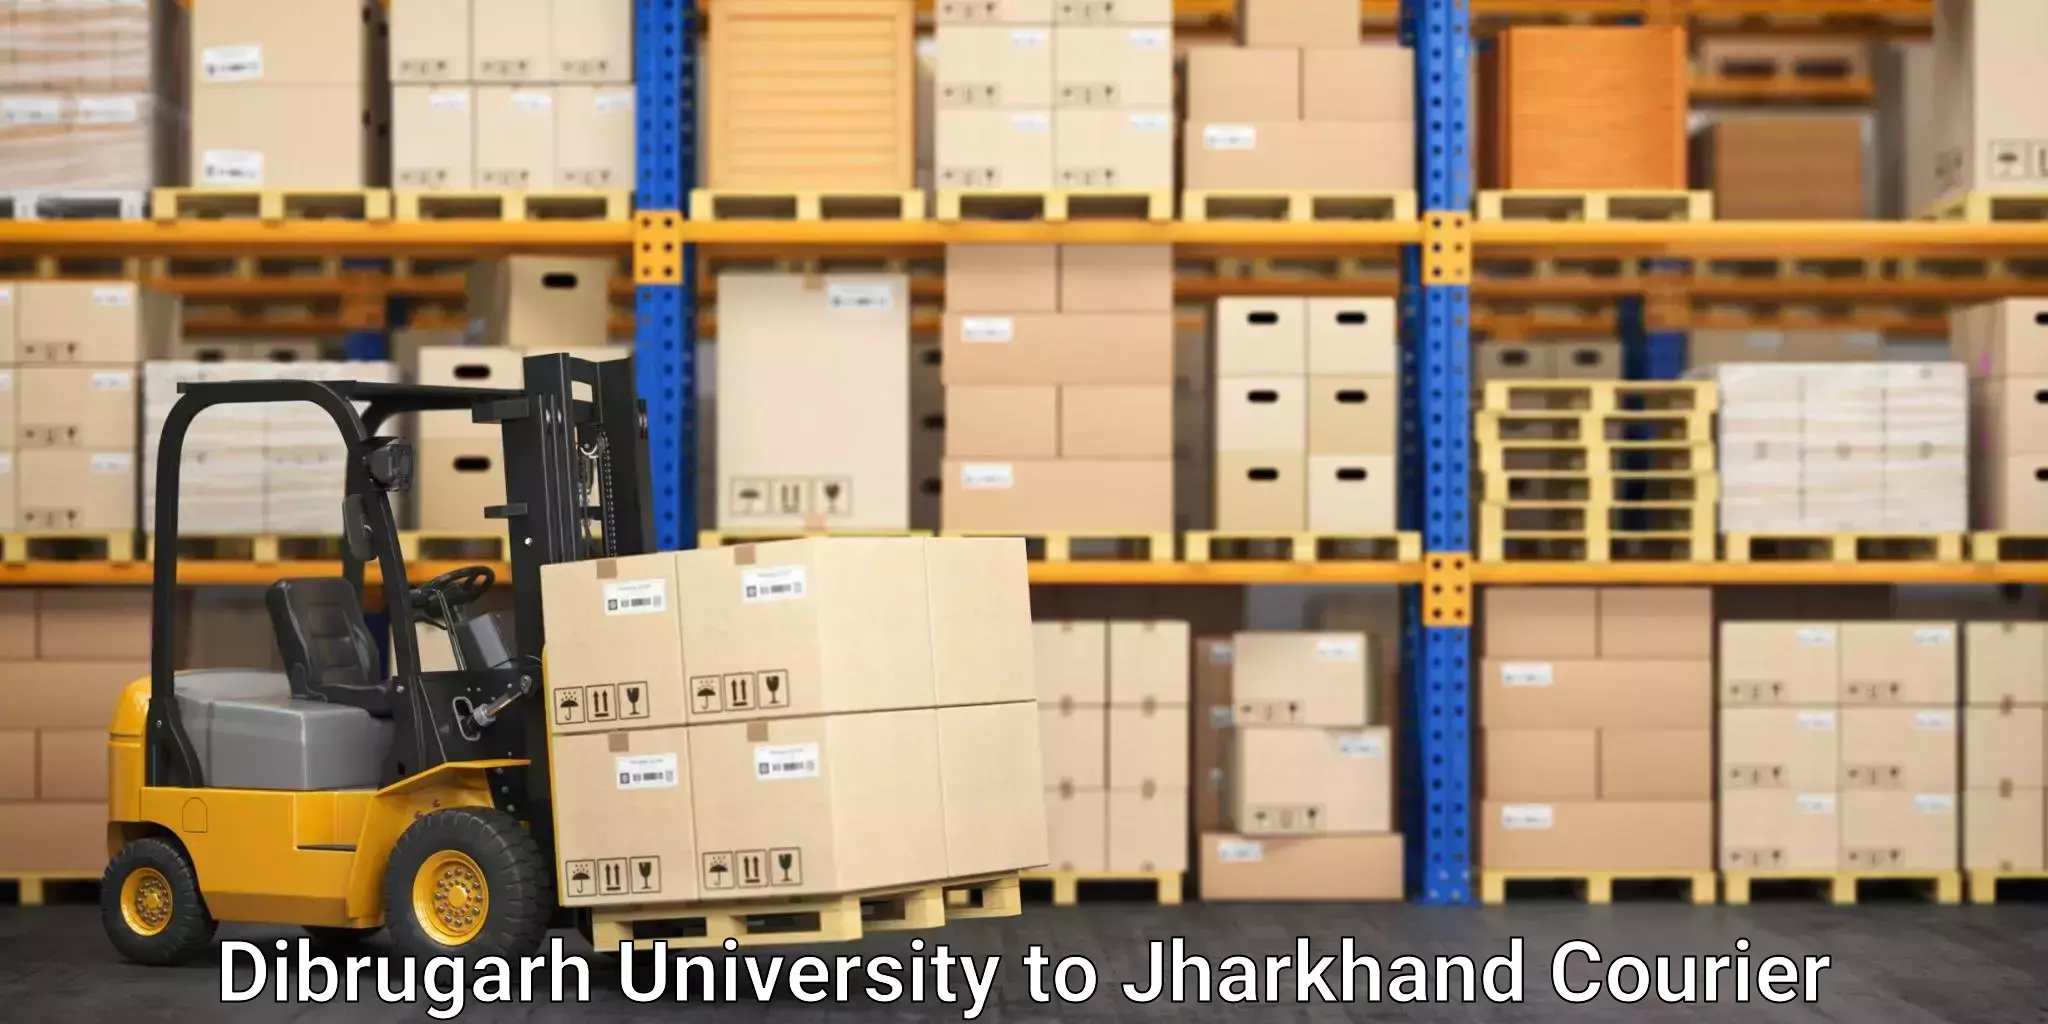 Efficient freight service Dibrugarh University to Seraikela Kharsawan